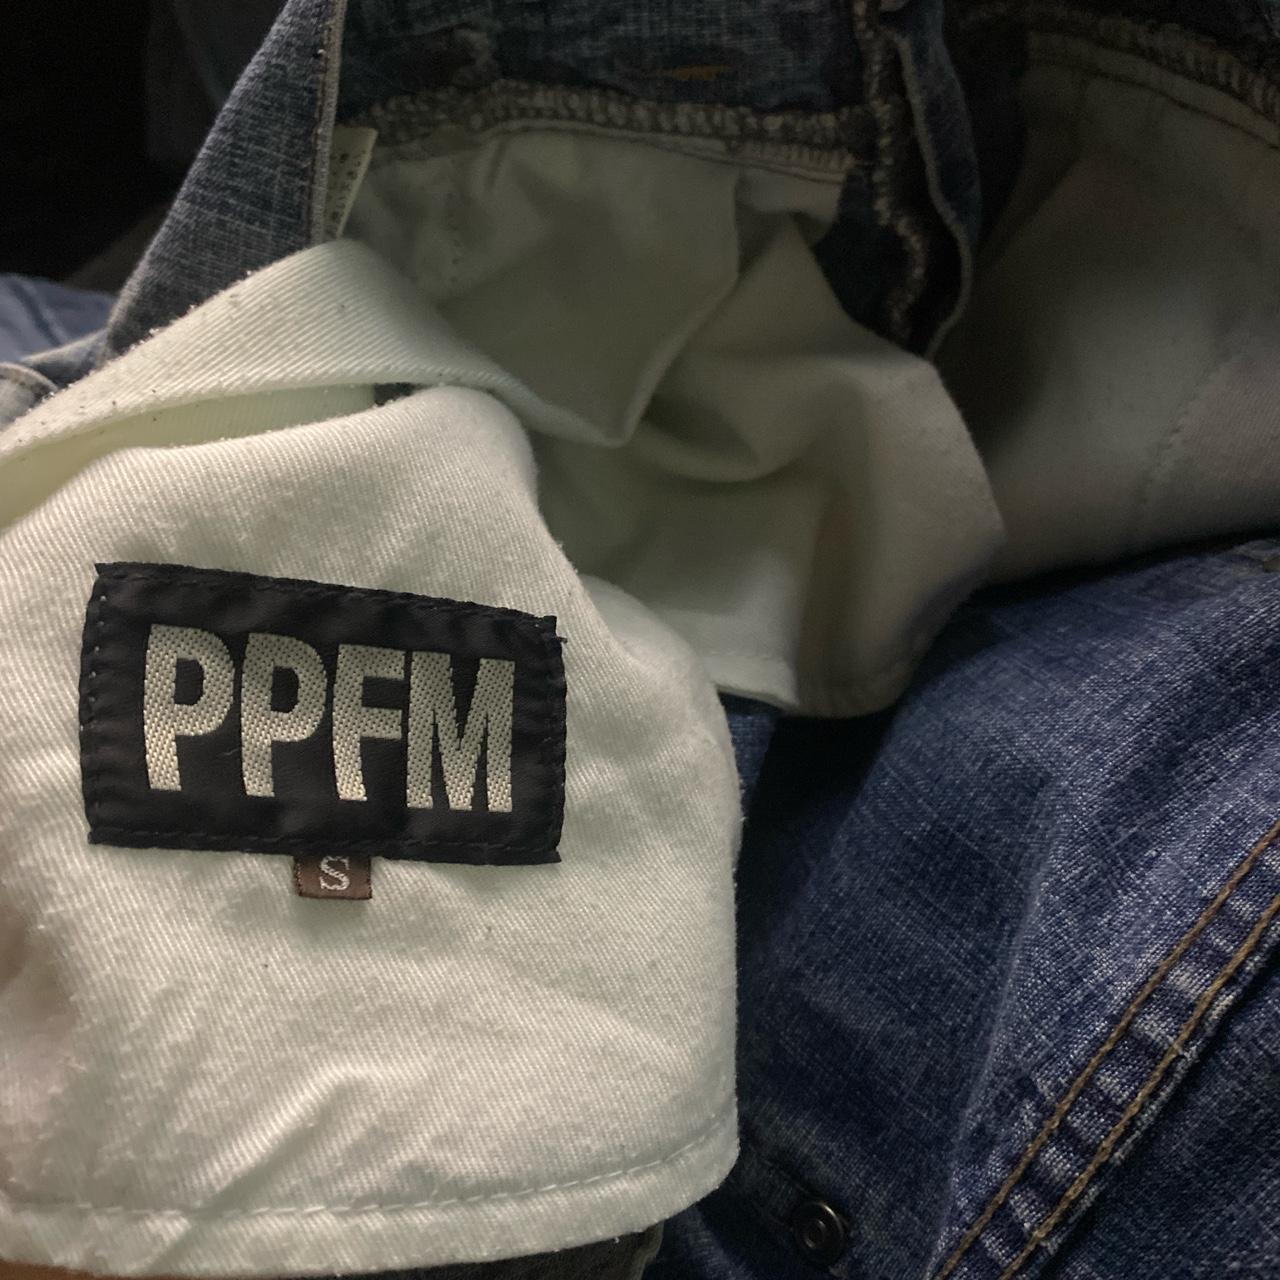 Japanese PPFM Denim -Features double pockets as seen... - Depop